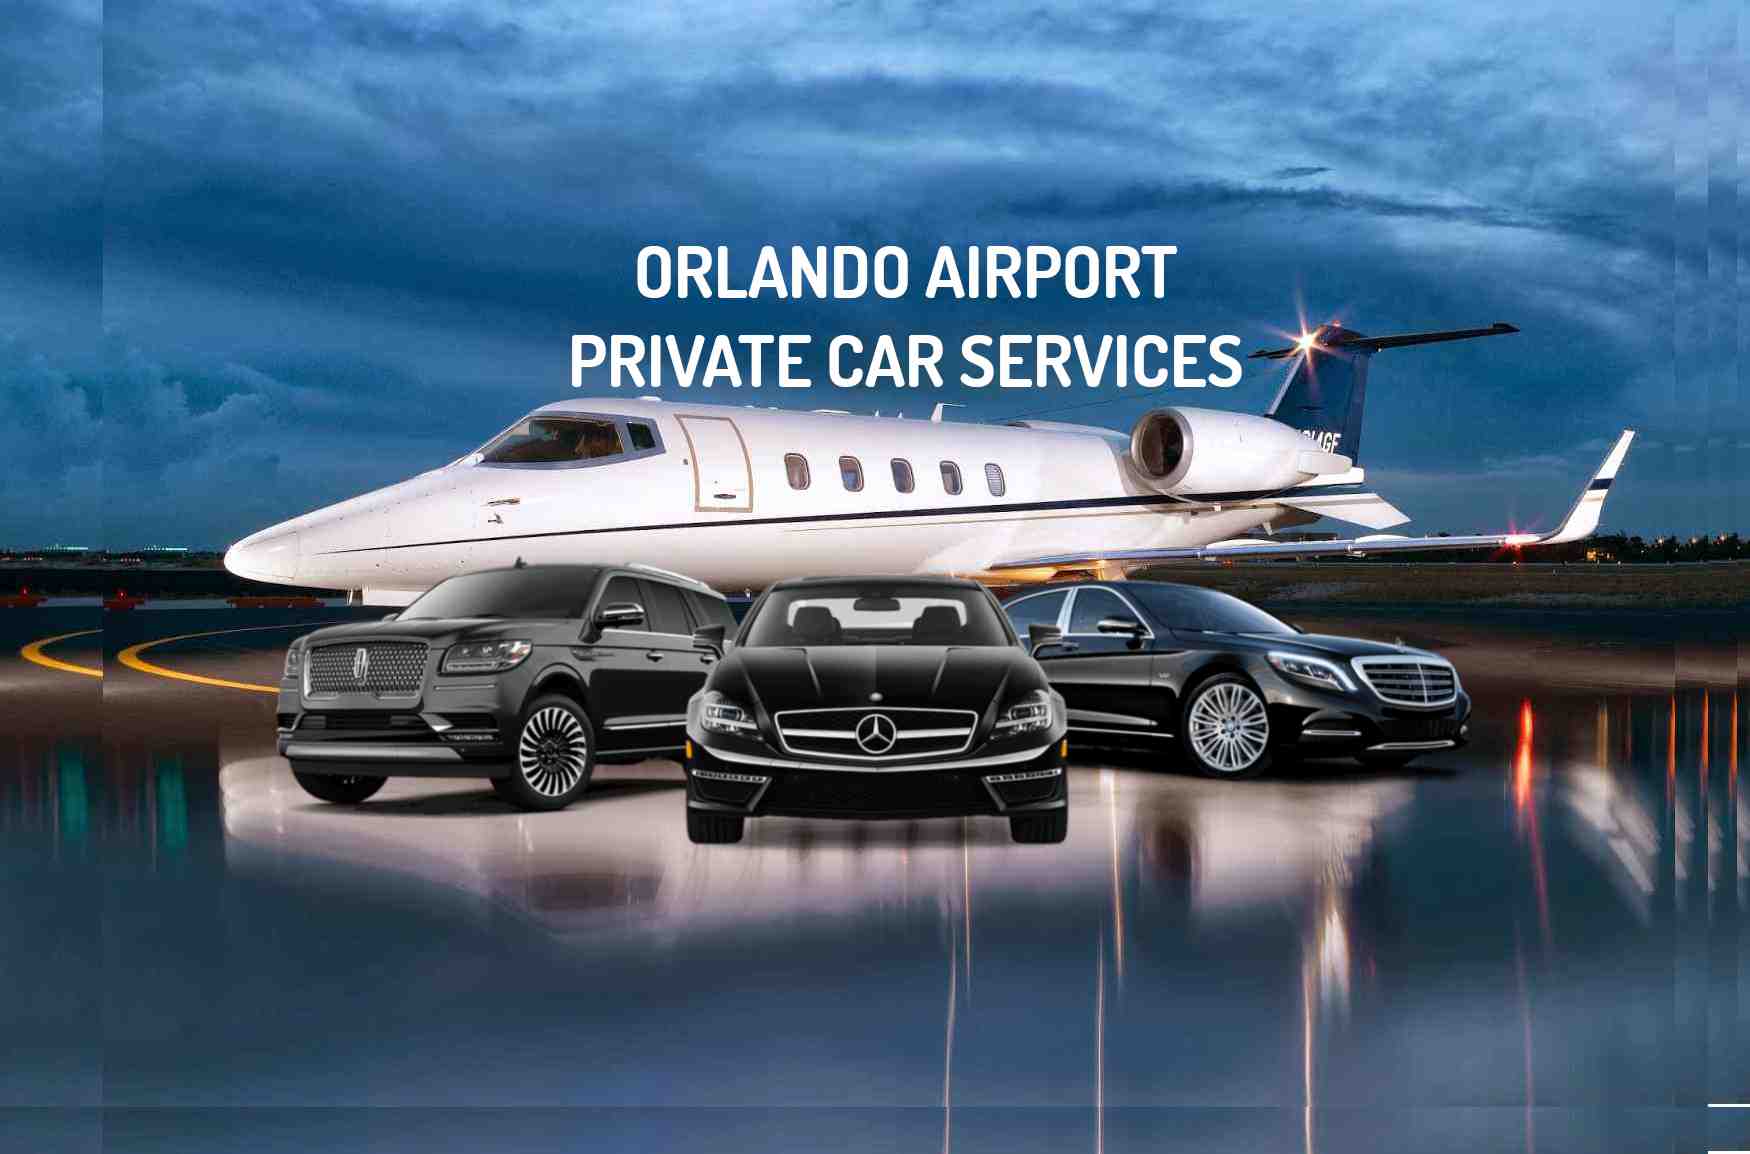 Orlando Airport Private Car Services